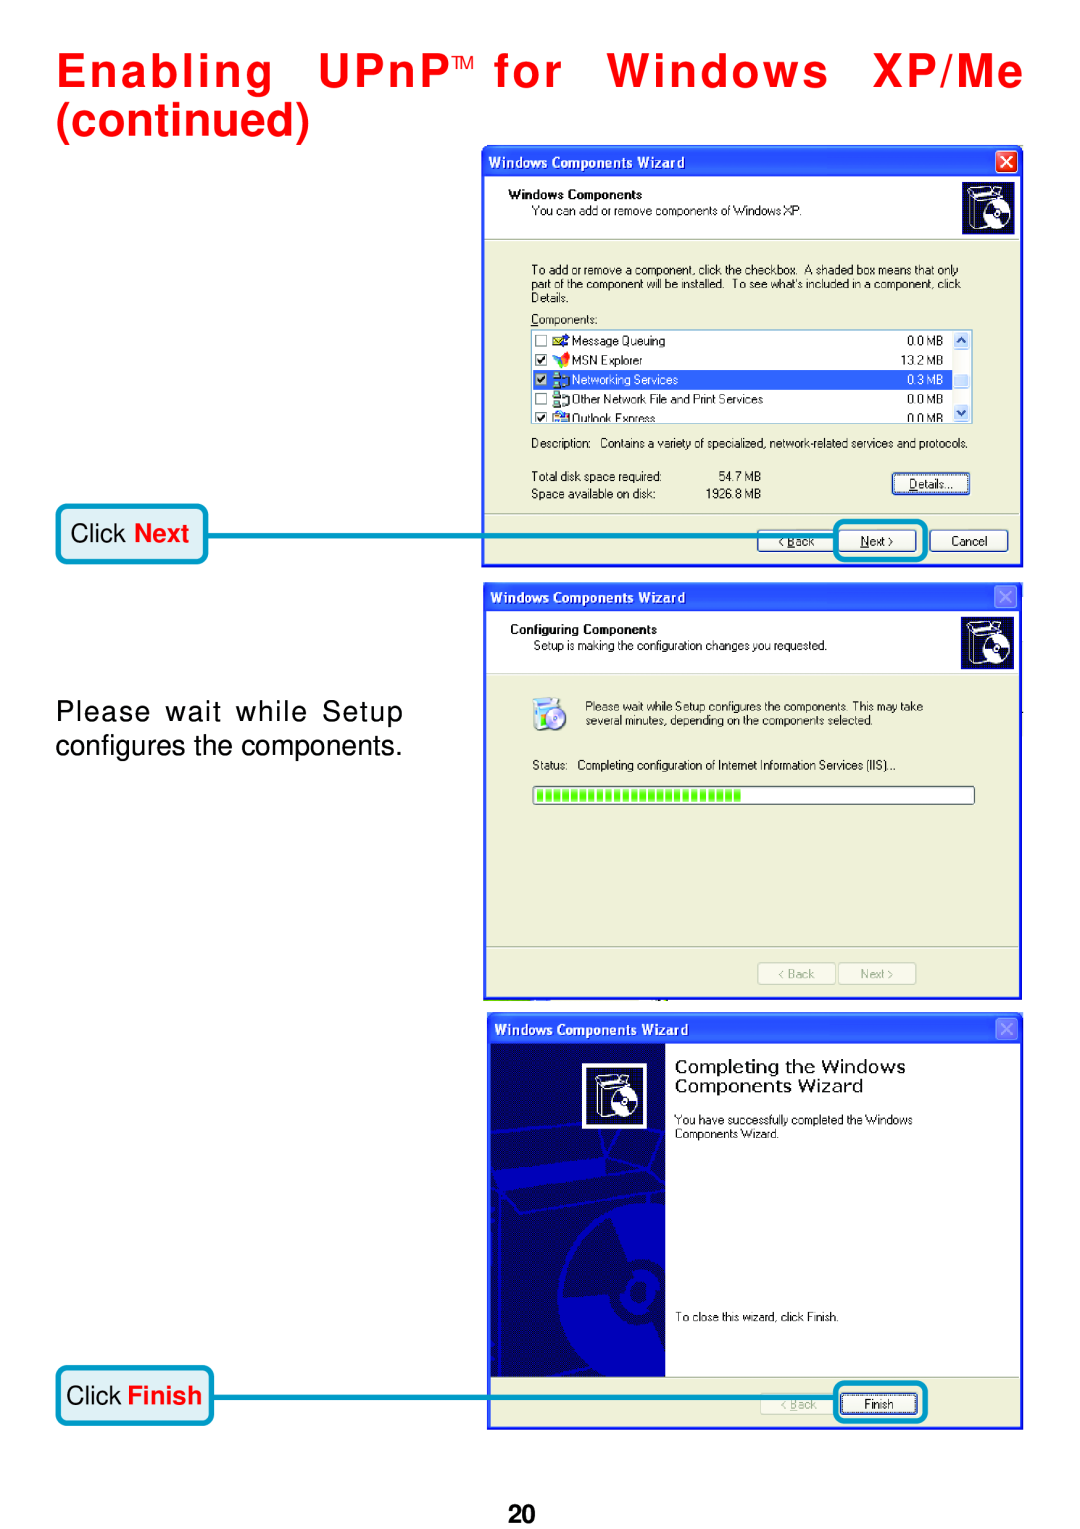 D-Link DCS-5300 Enabling UPnPTM for Windows XP/Me continued, Please wait while Setup configures the components, Click Next 